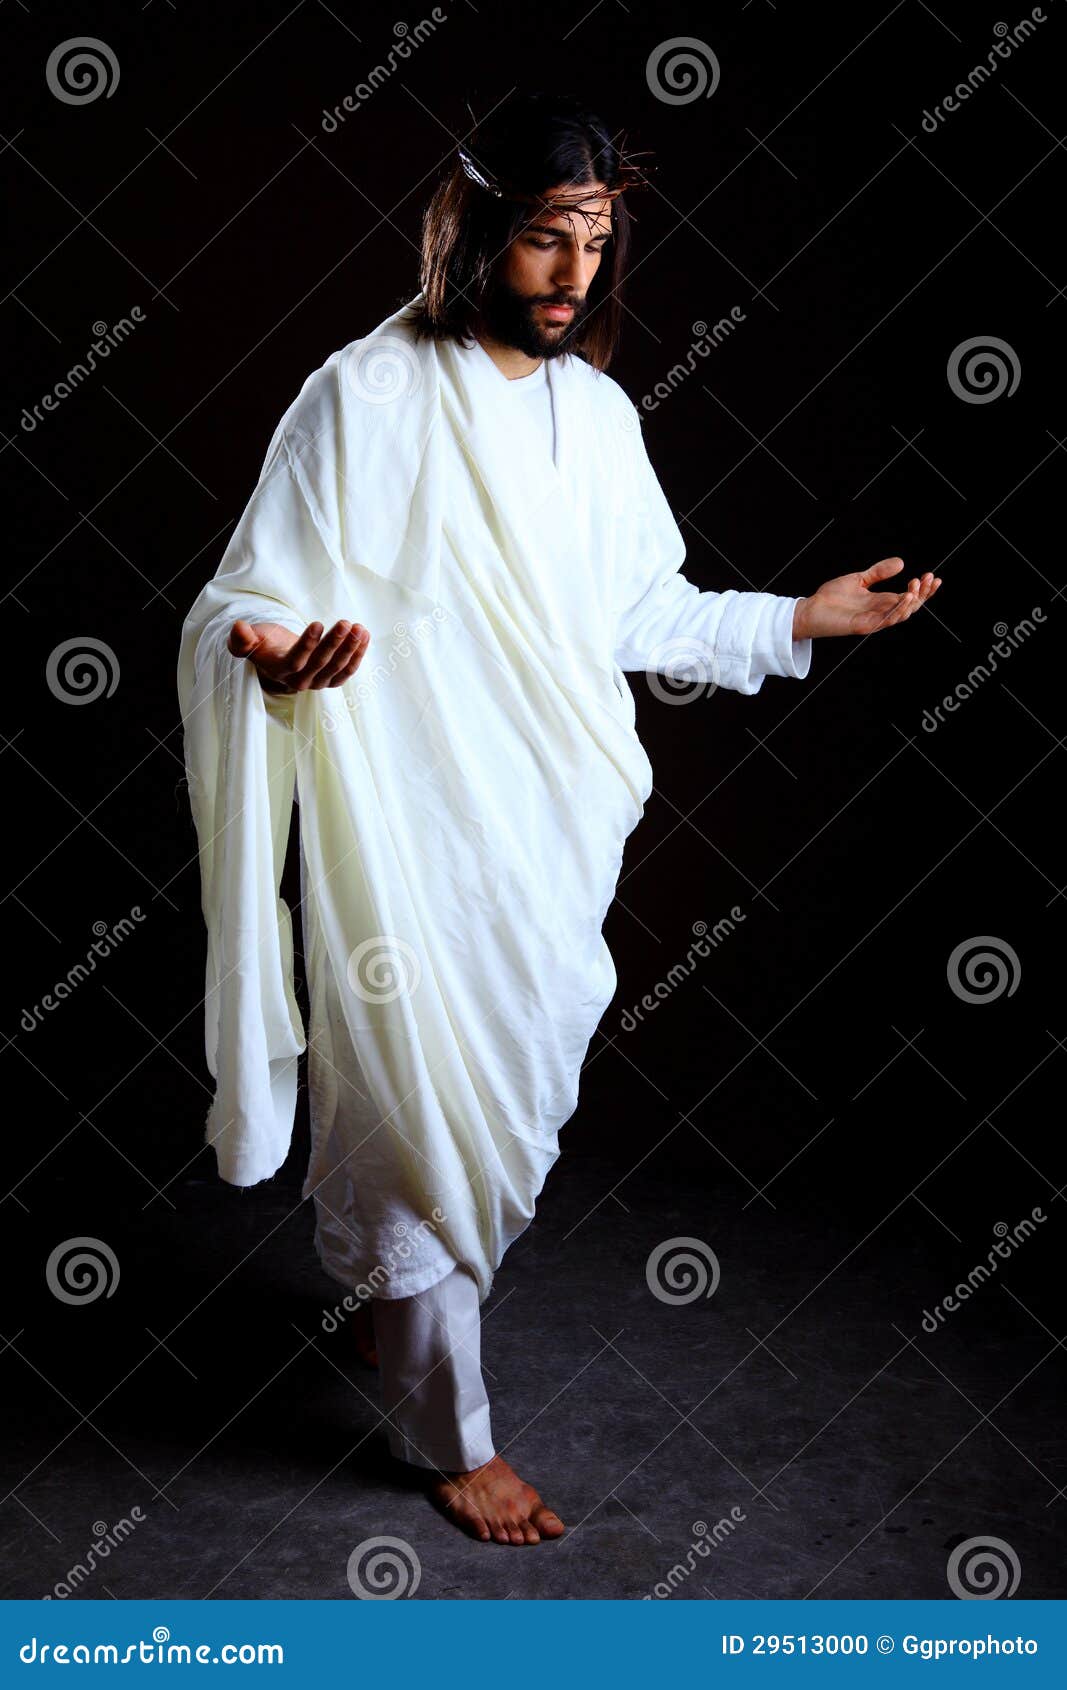 Jesucristo de Nazaret foto de archivo. Imagen de hombre - 29513000